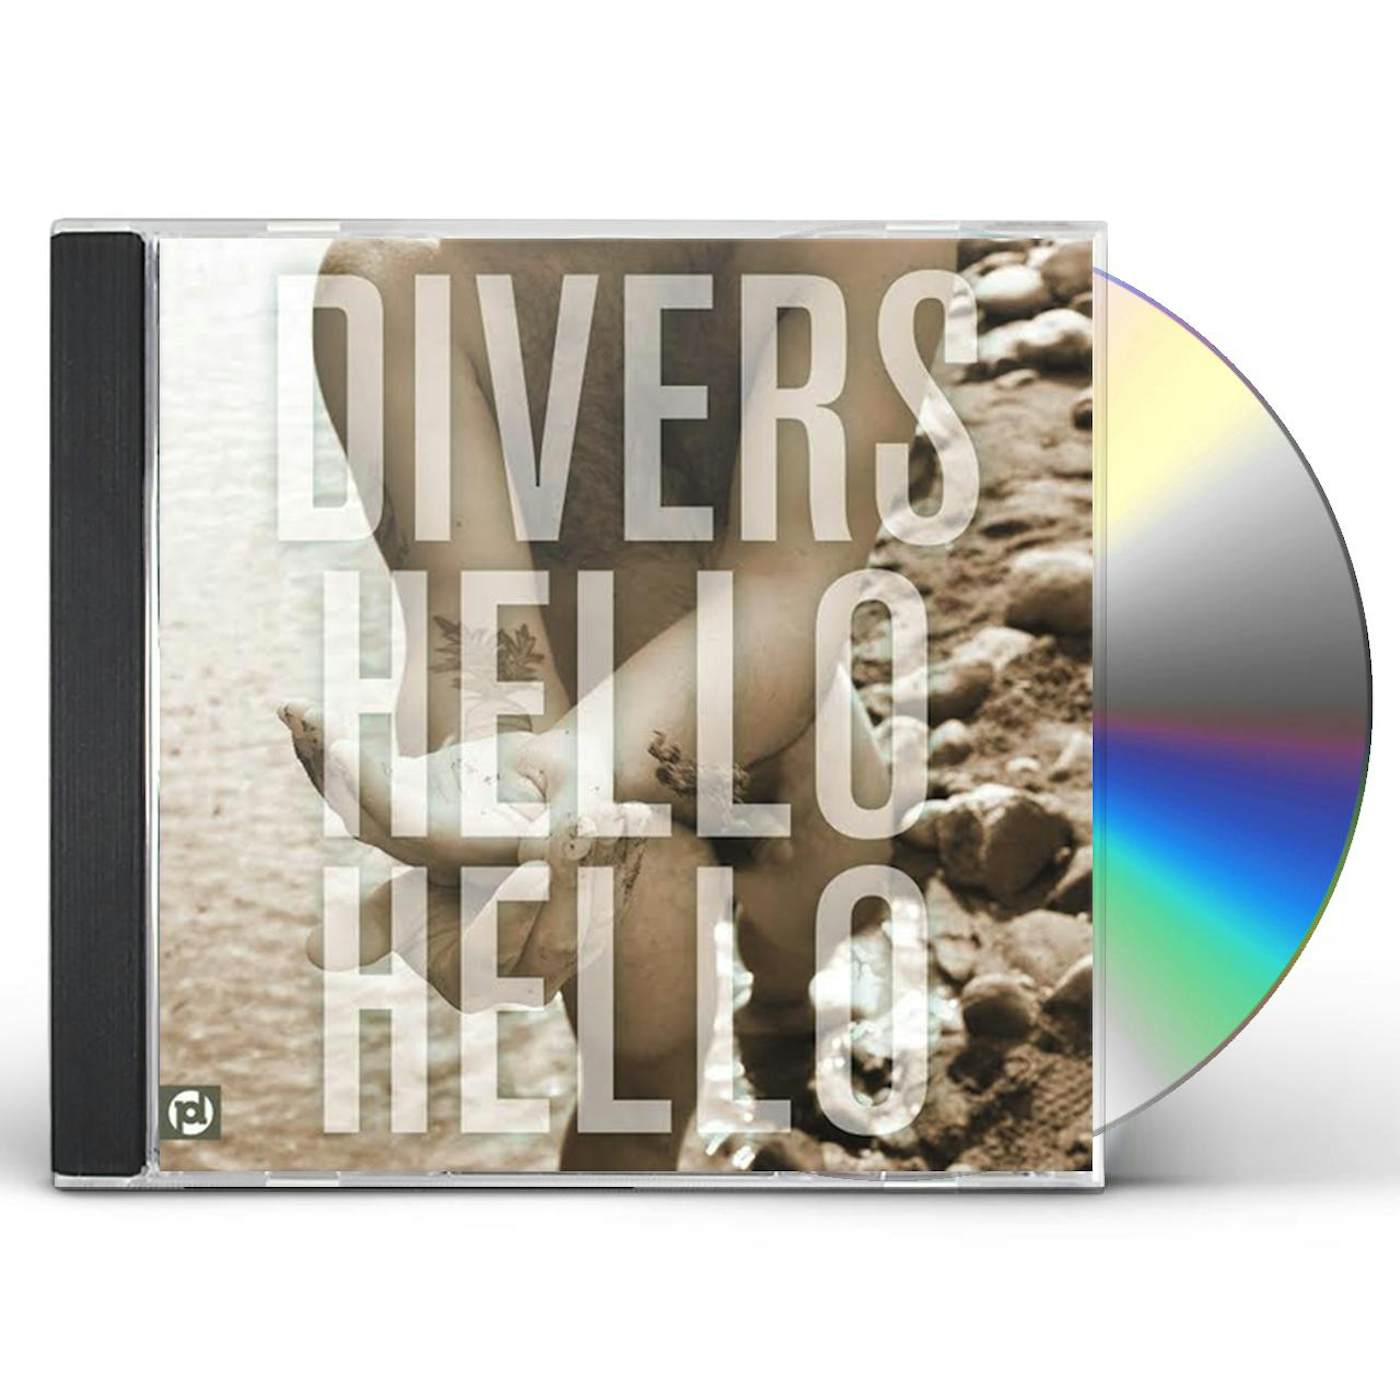 Divers HELLO HELLO CD